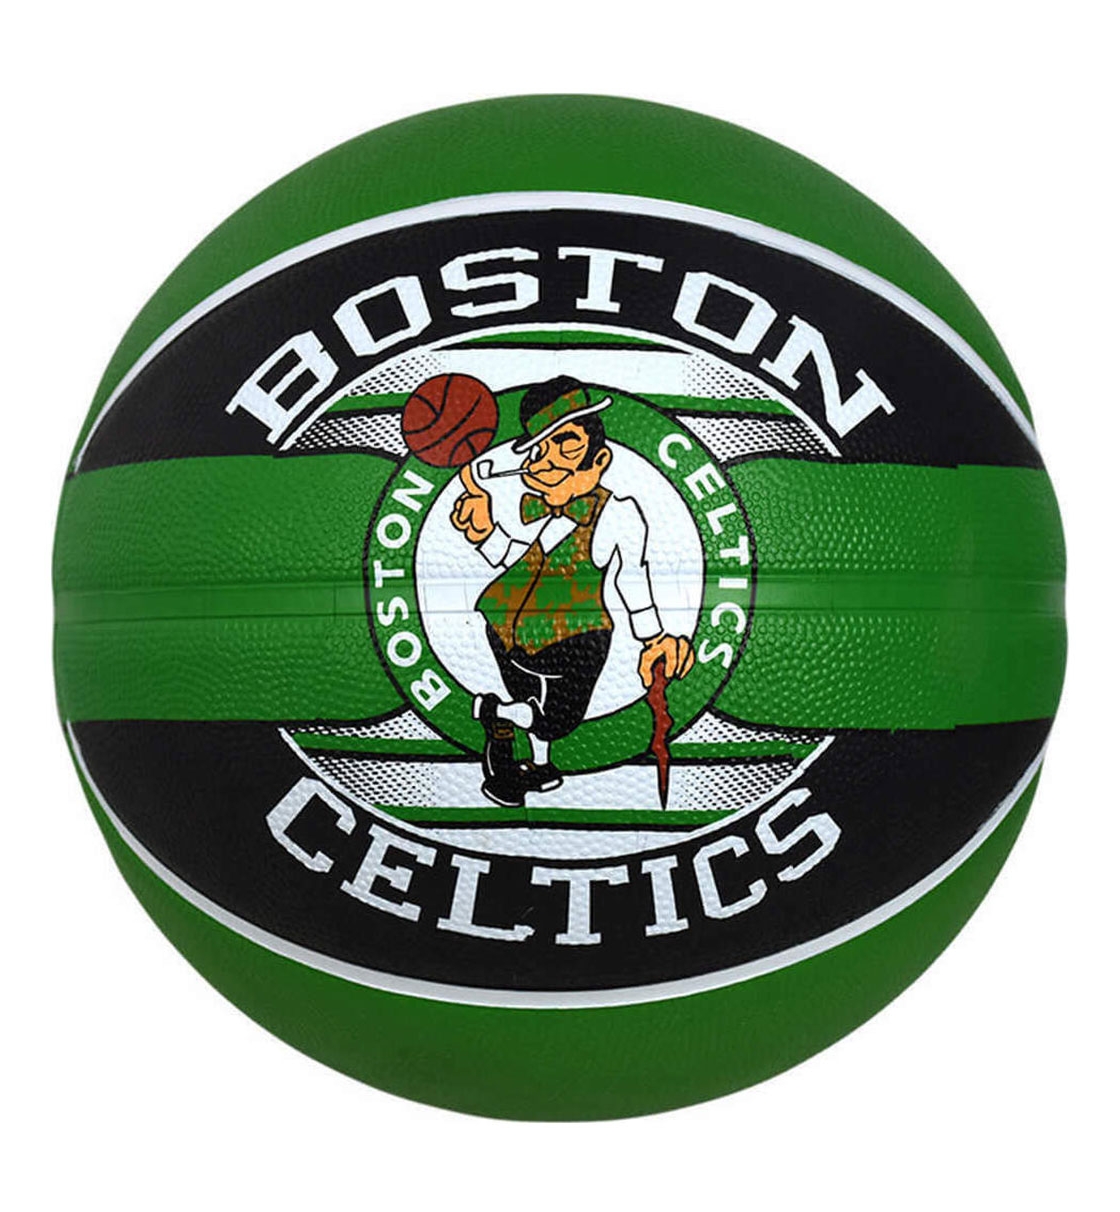 Spalding Fw21 Nba Team Size 7 Rubber Basketball - Celtics